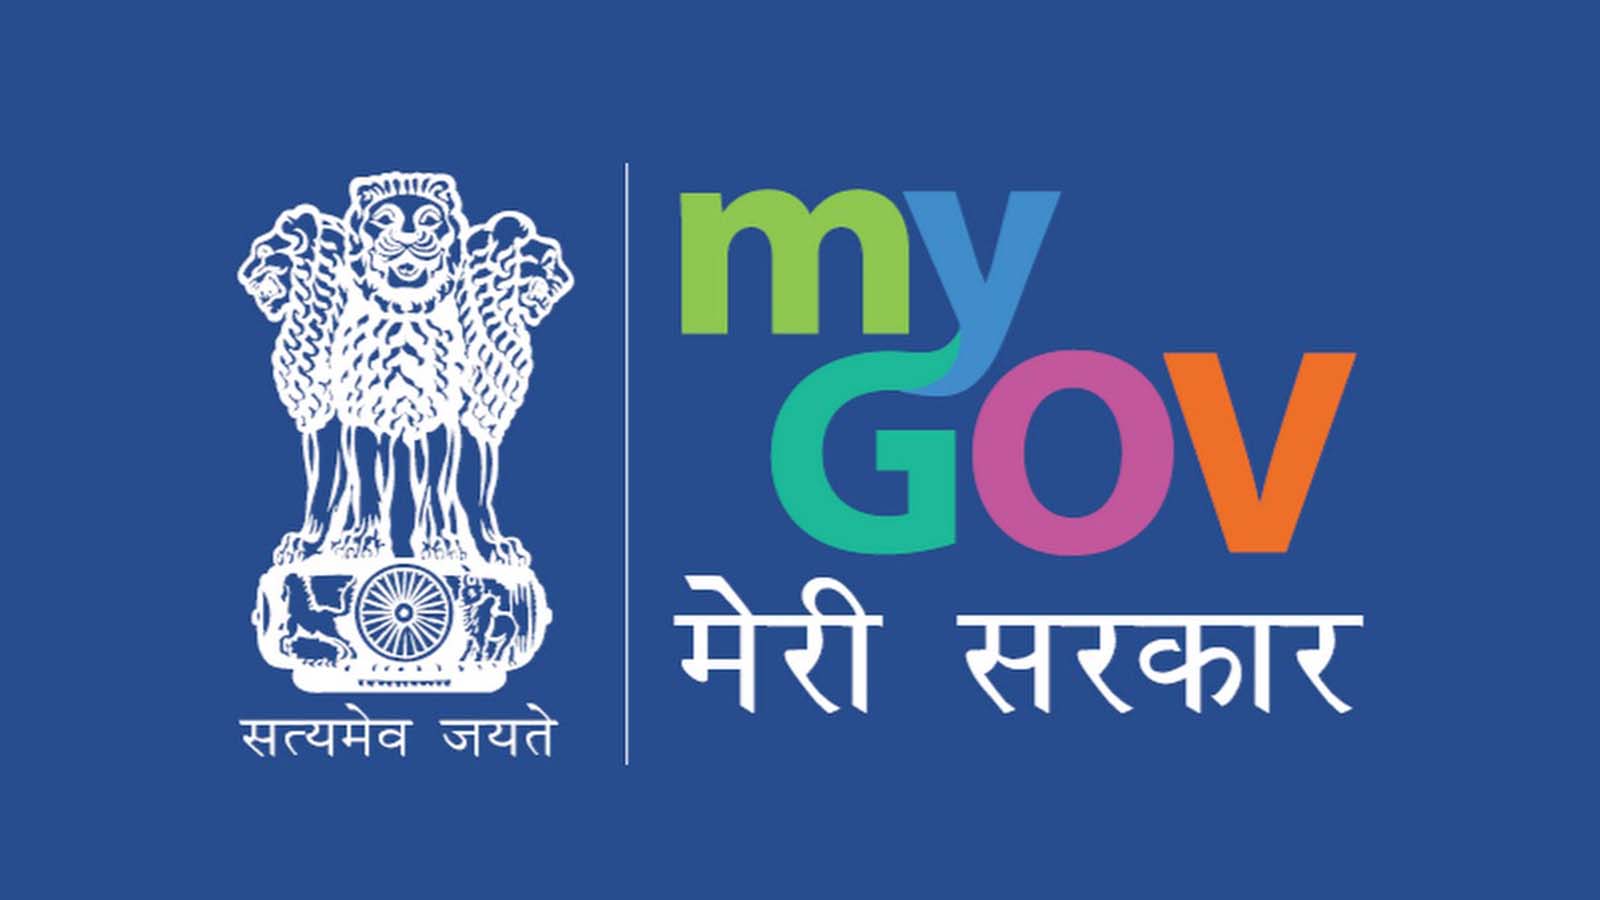 ASEAN-India Logo Design and Tagline Contest | MyGov.in